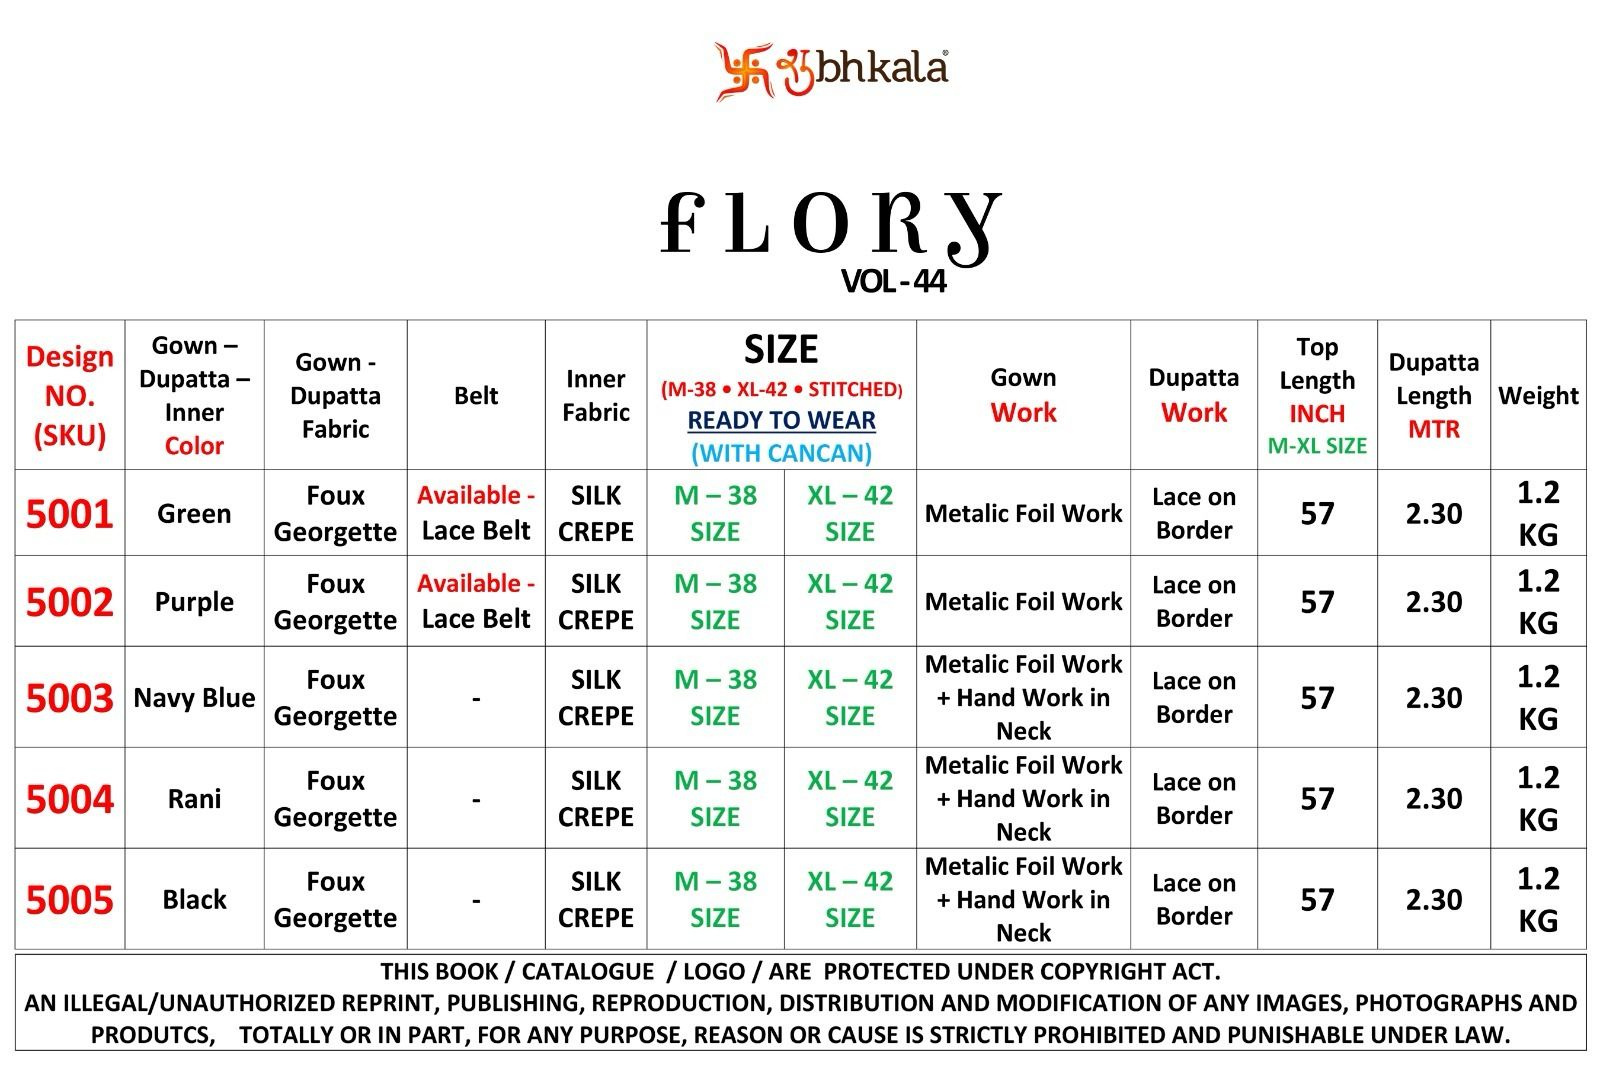 Flory Vol 44 Shubhkala Fox Georgette Gown Dupatta Set